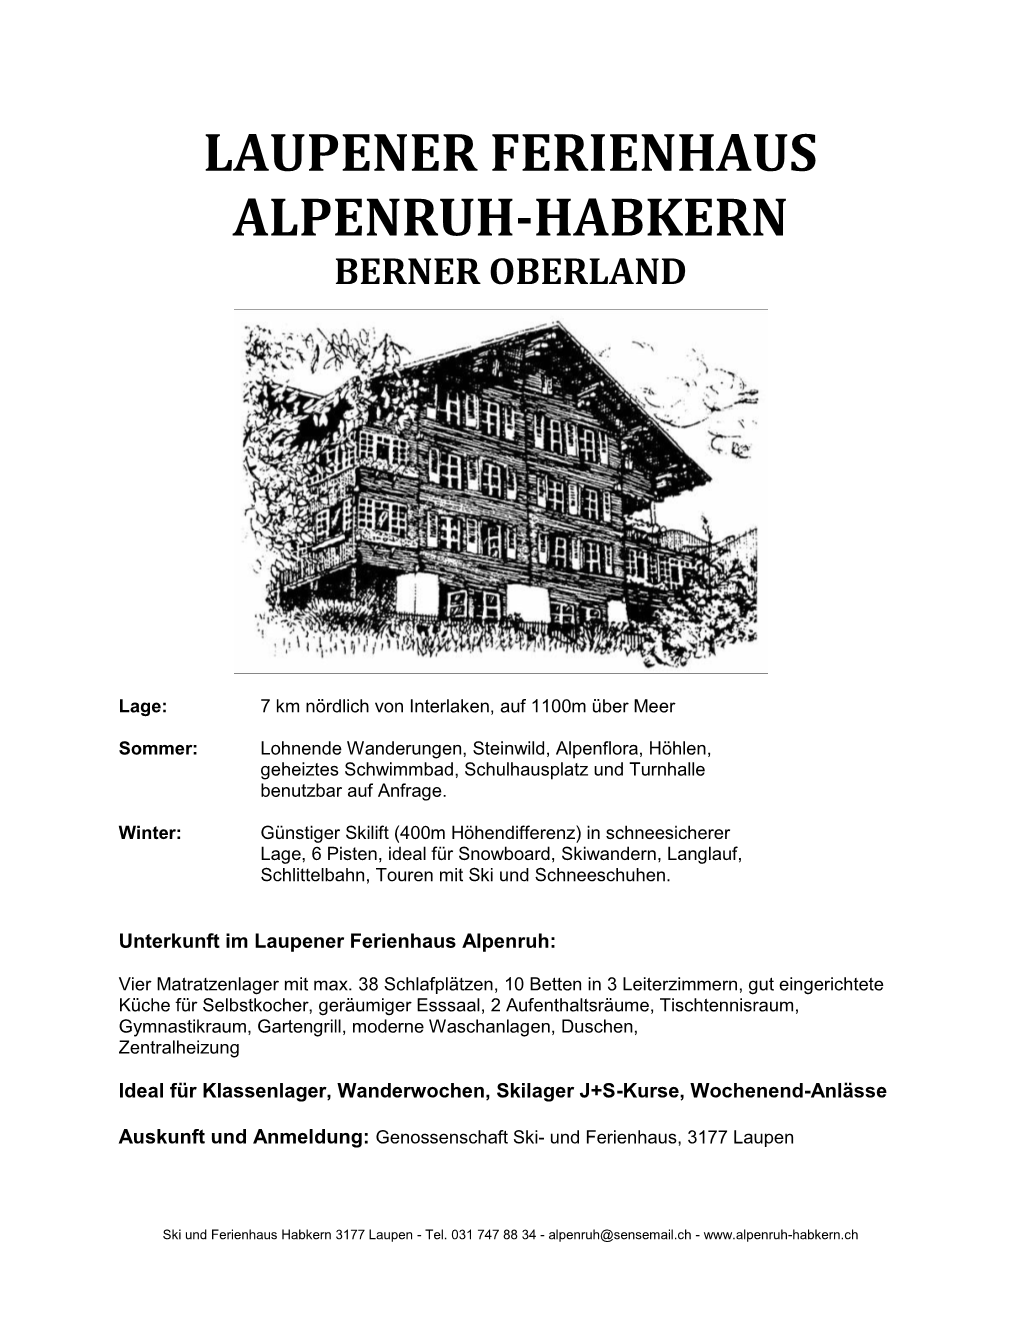 Laupener Ferienhaus Alpenruh-Habkern Berner Oberland